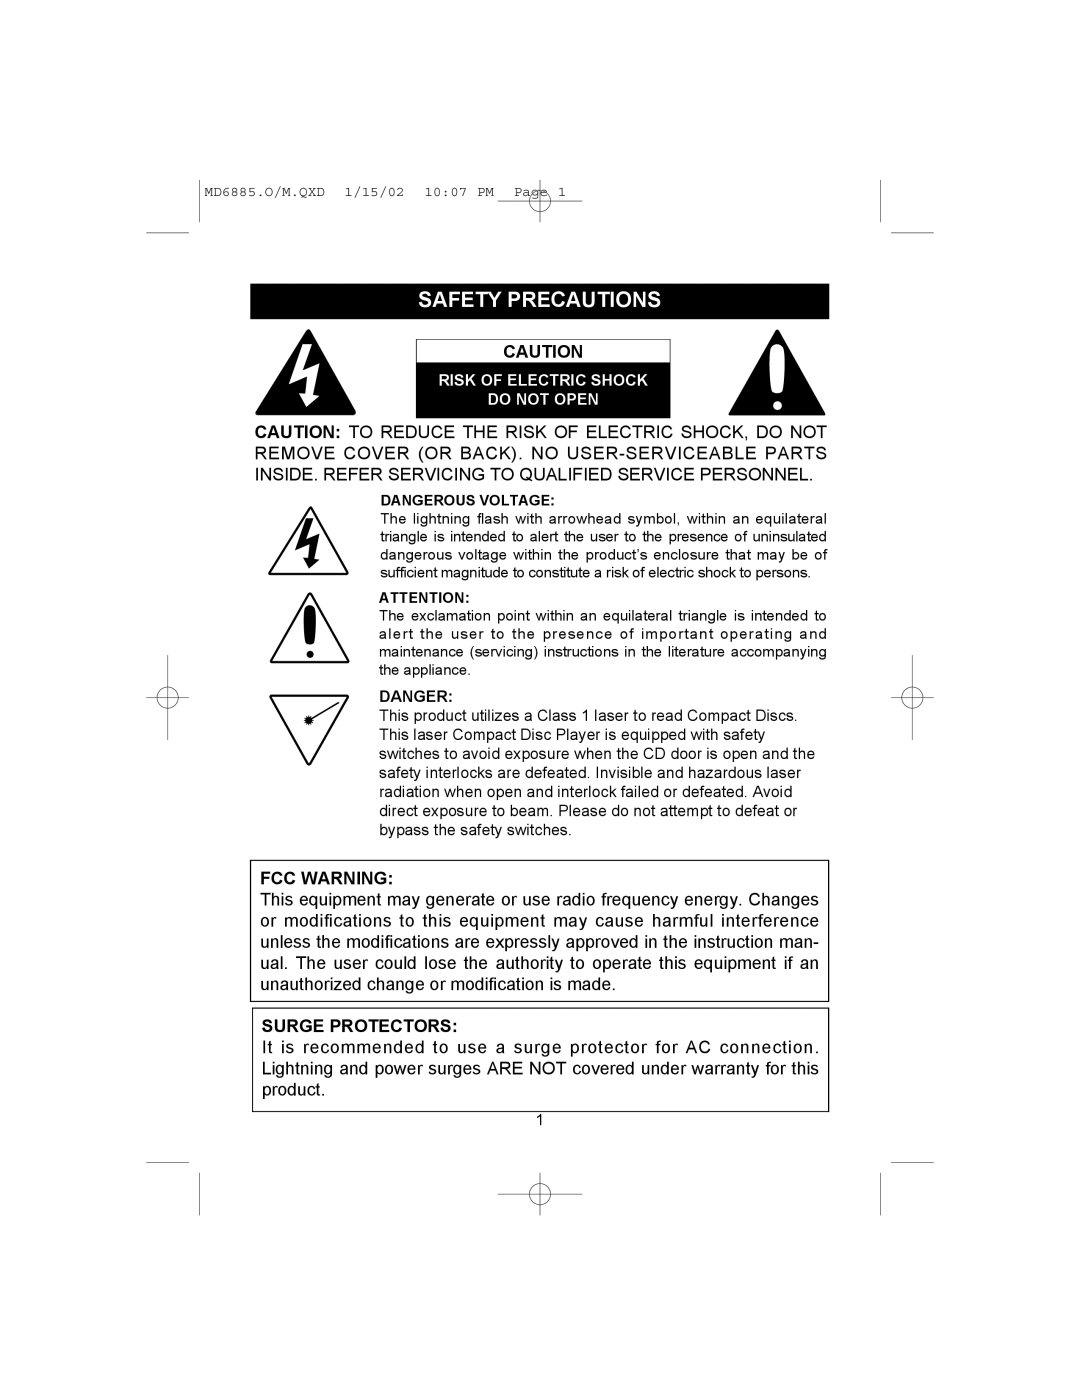 Memorex MD6868 manual Safety Precautions, Fcc Warning, Surge Protectors 